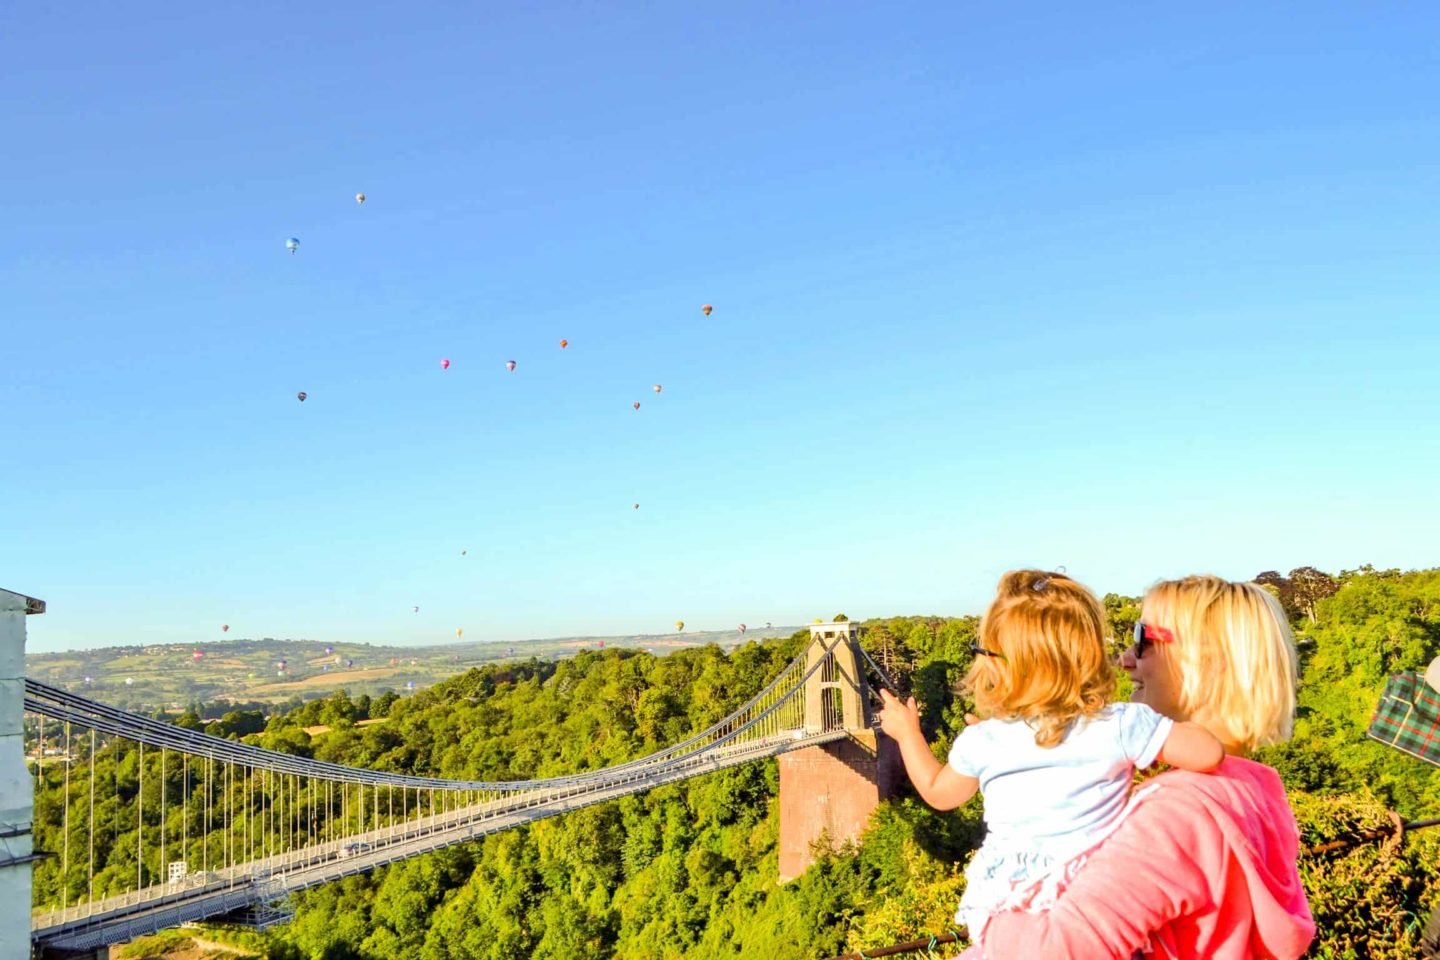 Watching balloons over Clifton Suspension Bridge, Bristol